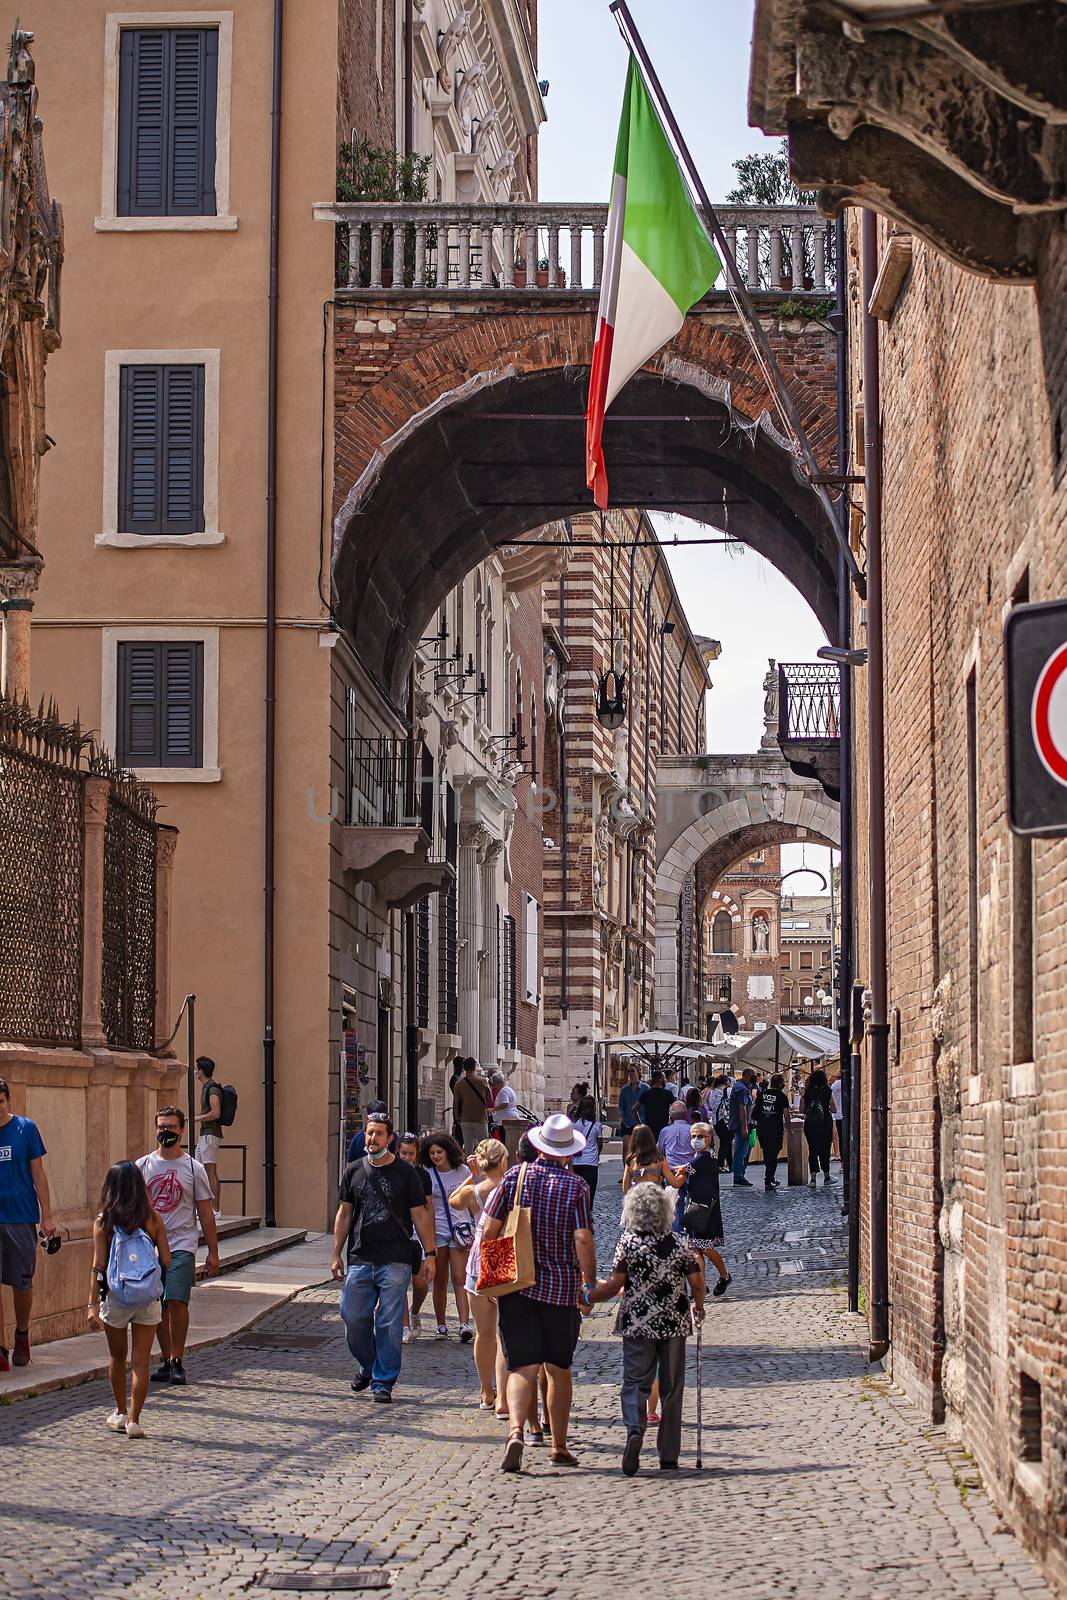 Arcades in Verona full of people walking by pippocarlot